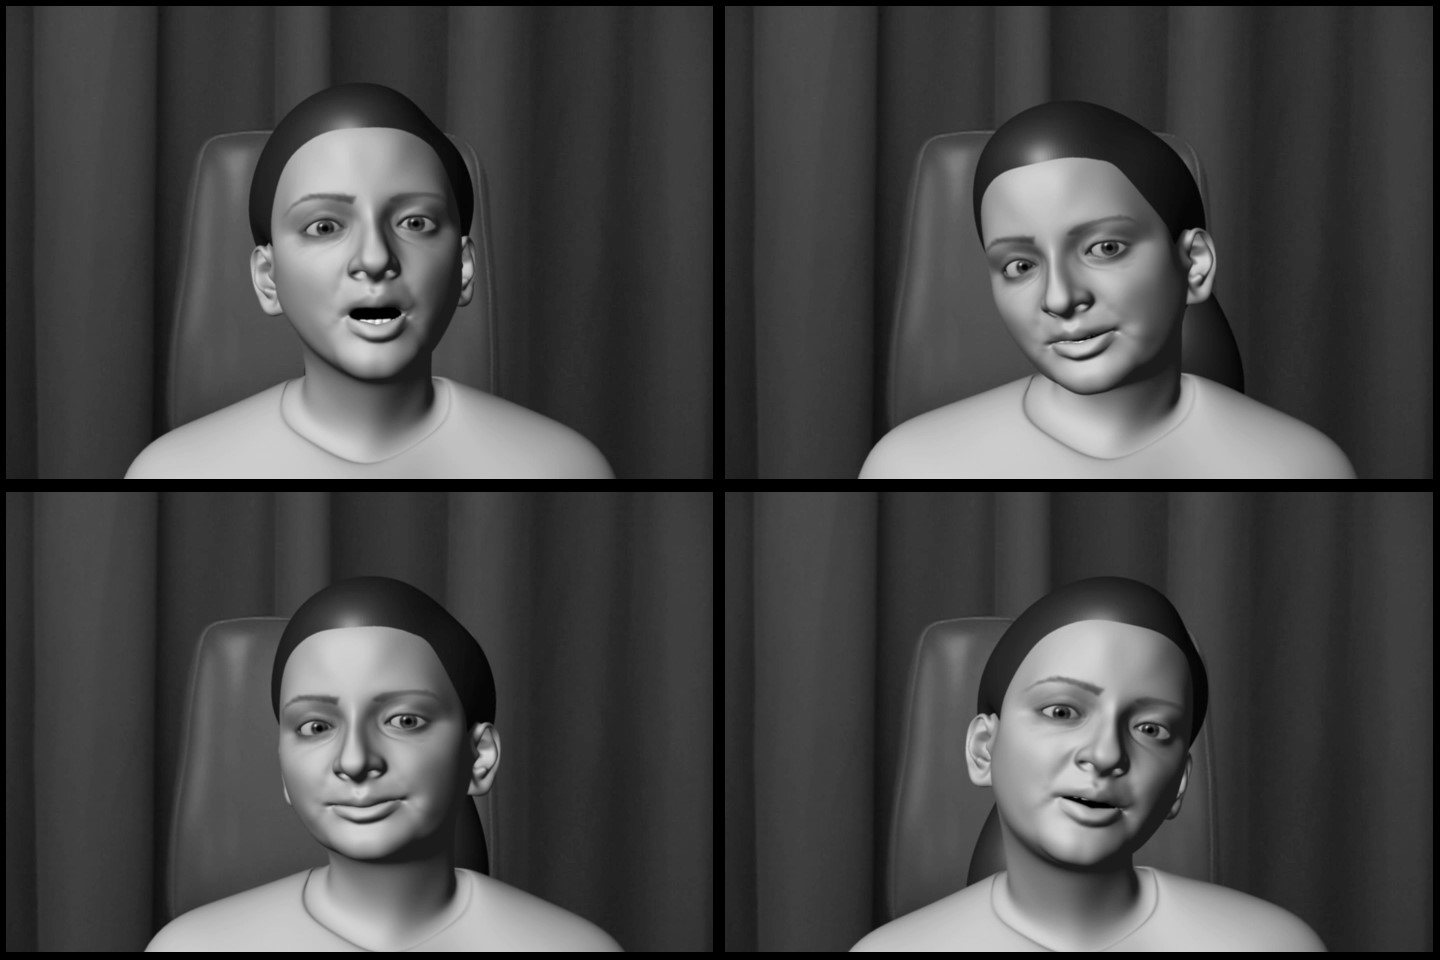 4 panel figure of digital faces making various speech sounds